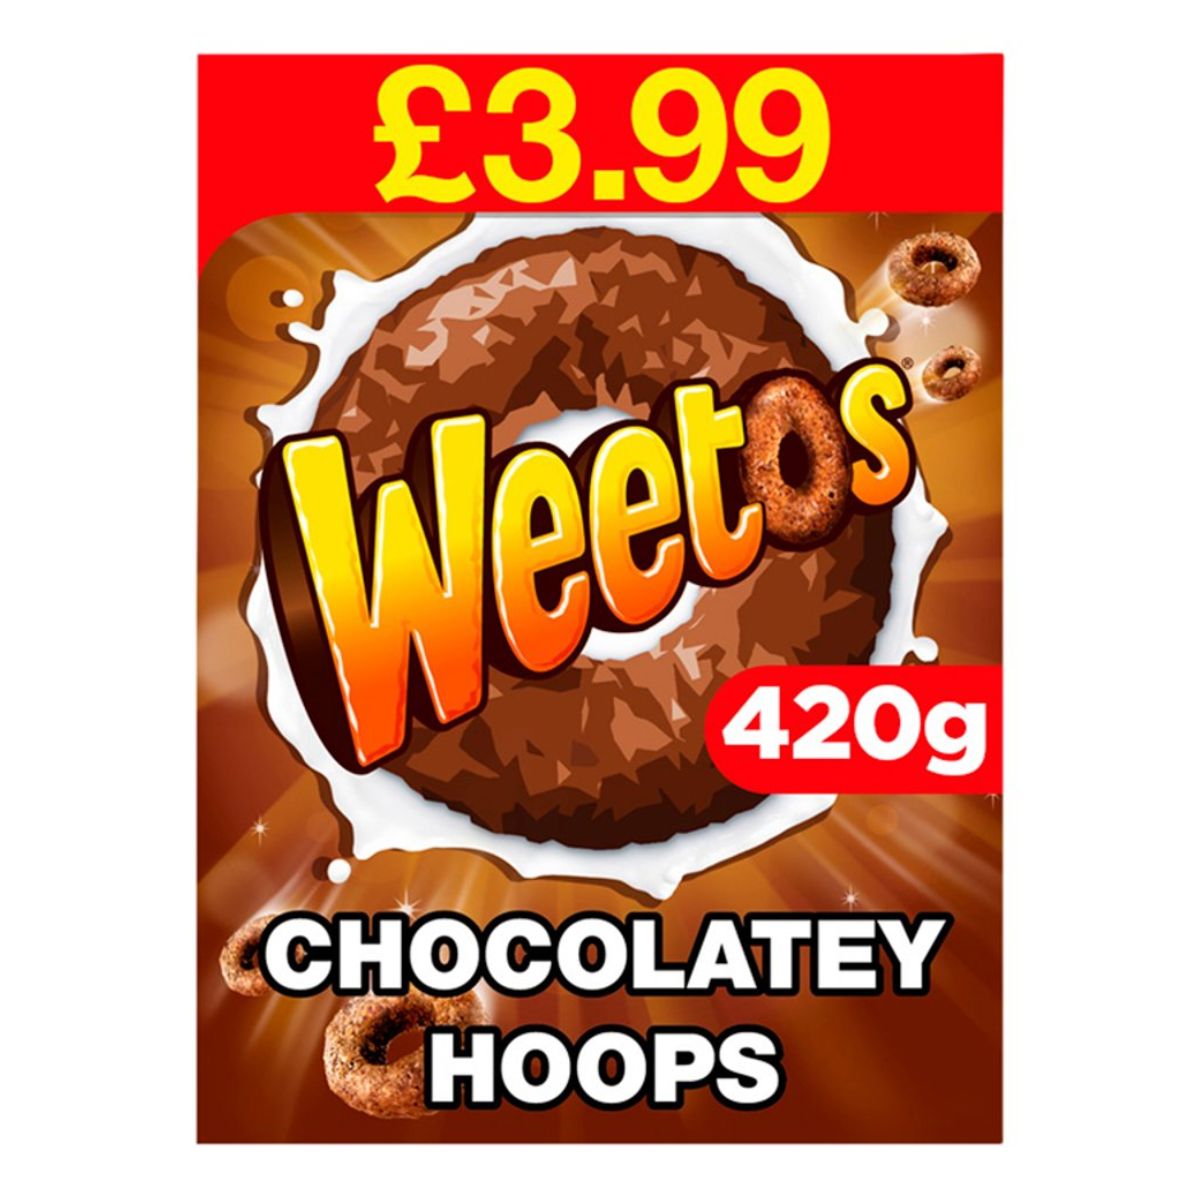 Weetos - Chocolatey Hoops - 420g chocolate chocolatey hoops.